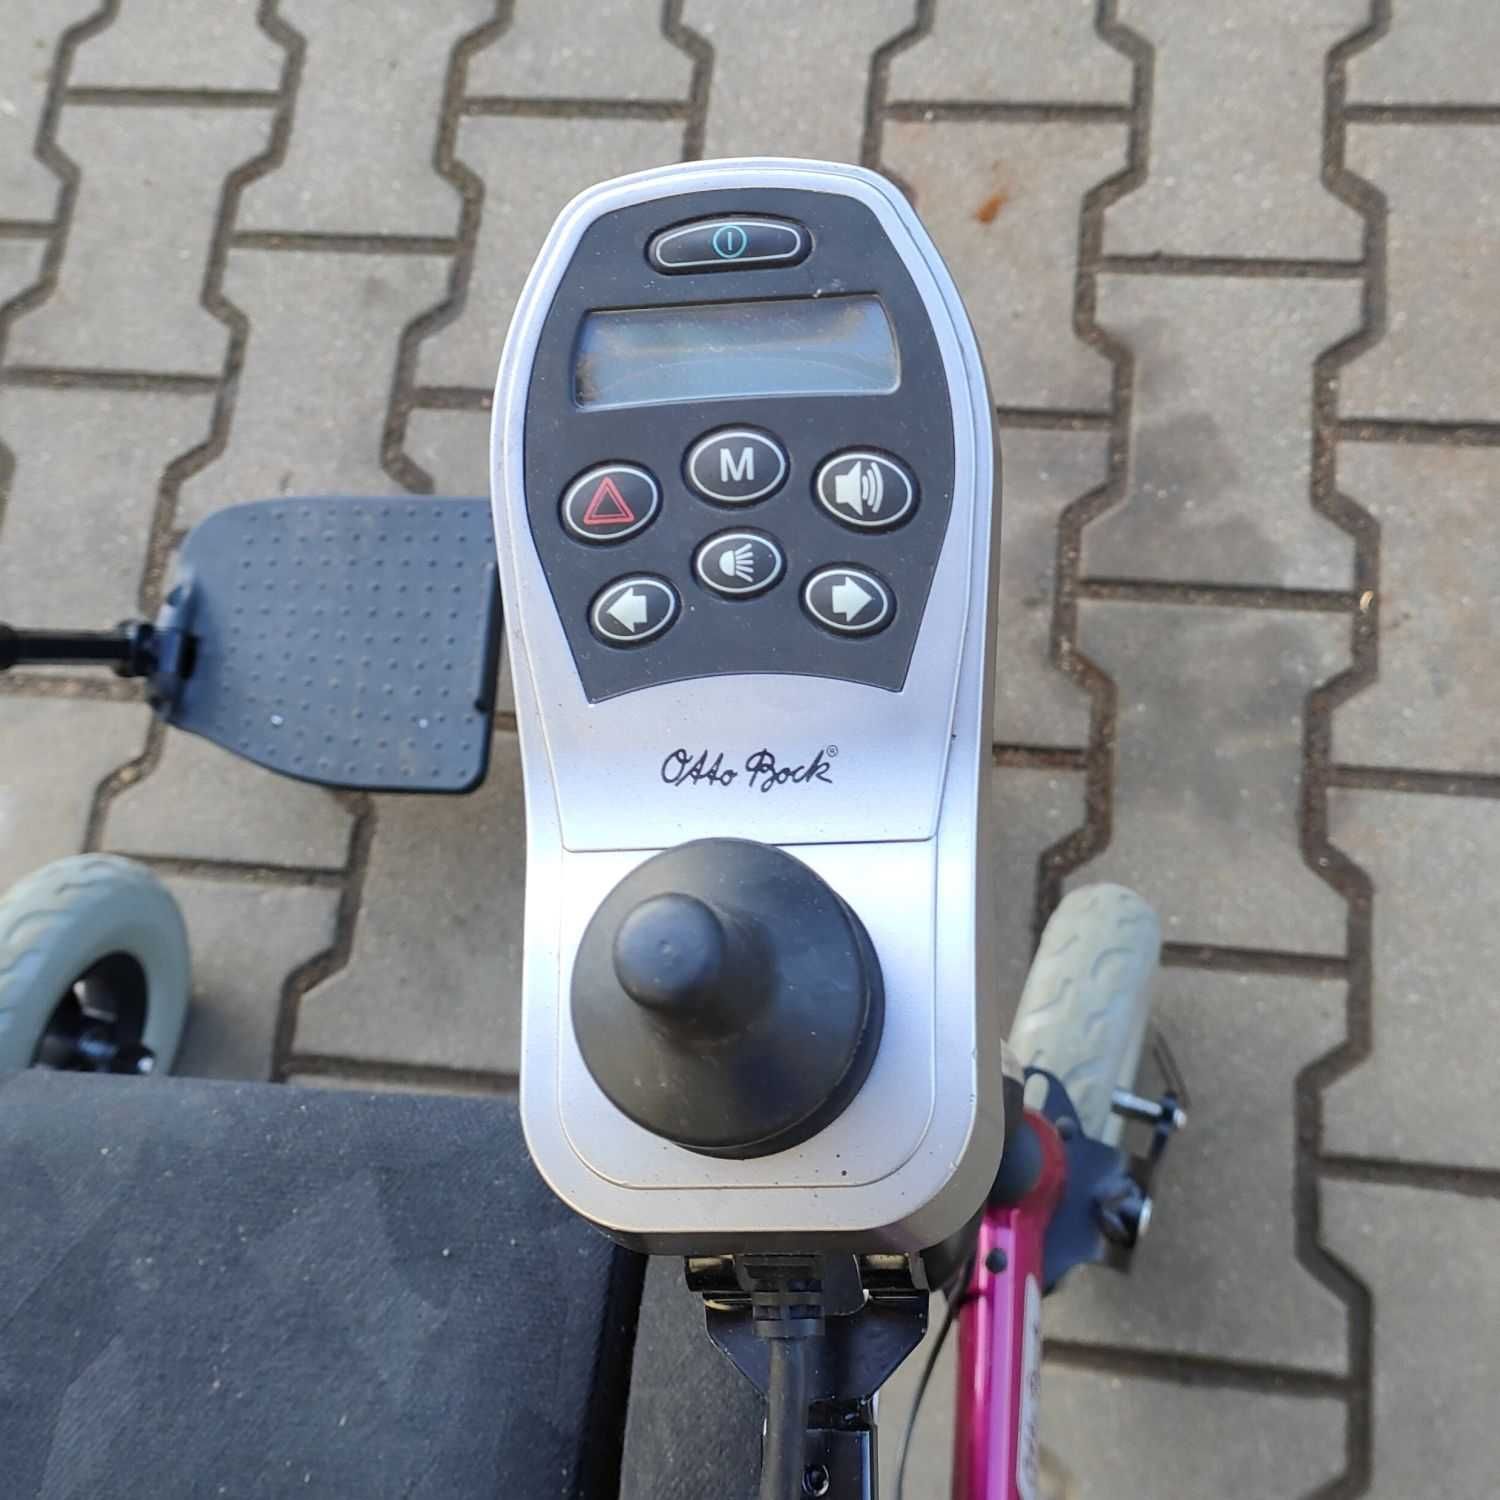 Wózek inwalidzki elektryczny Otto Bock B600 fotel Recaro